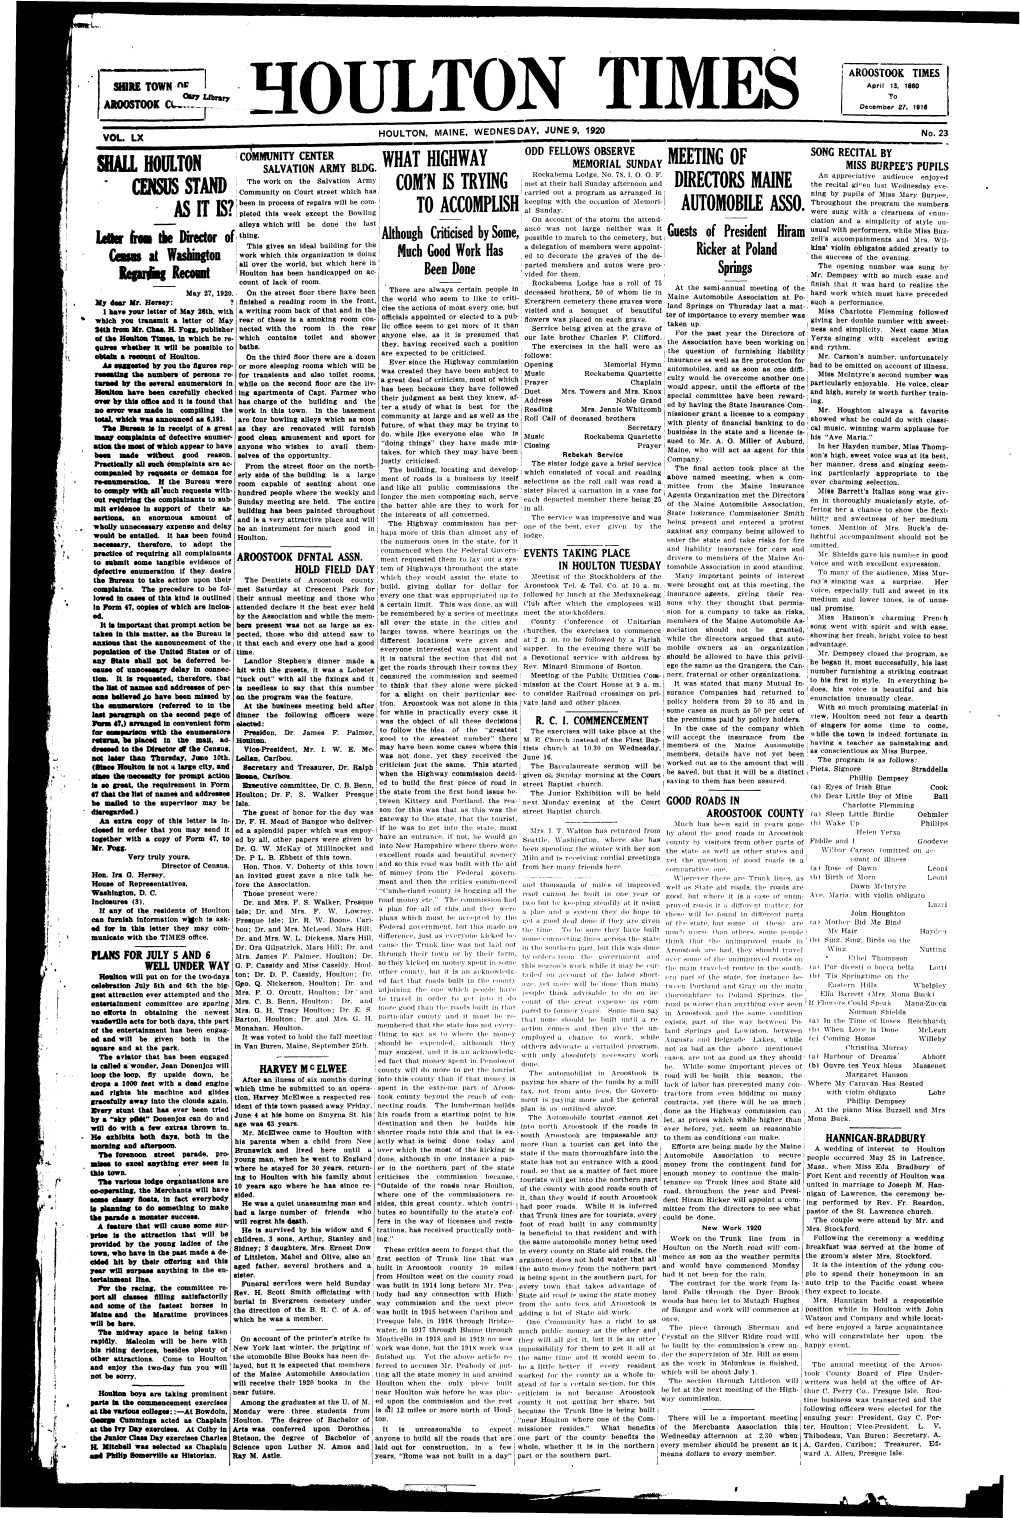 Houlton Times, June 9, 1920